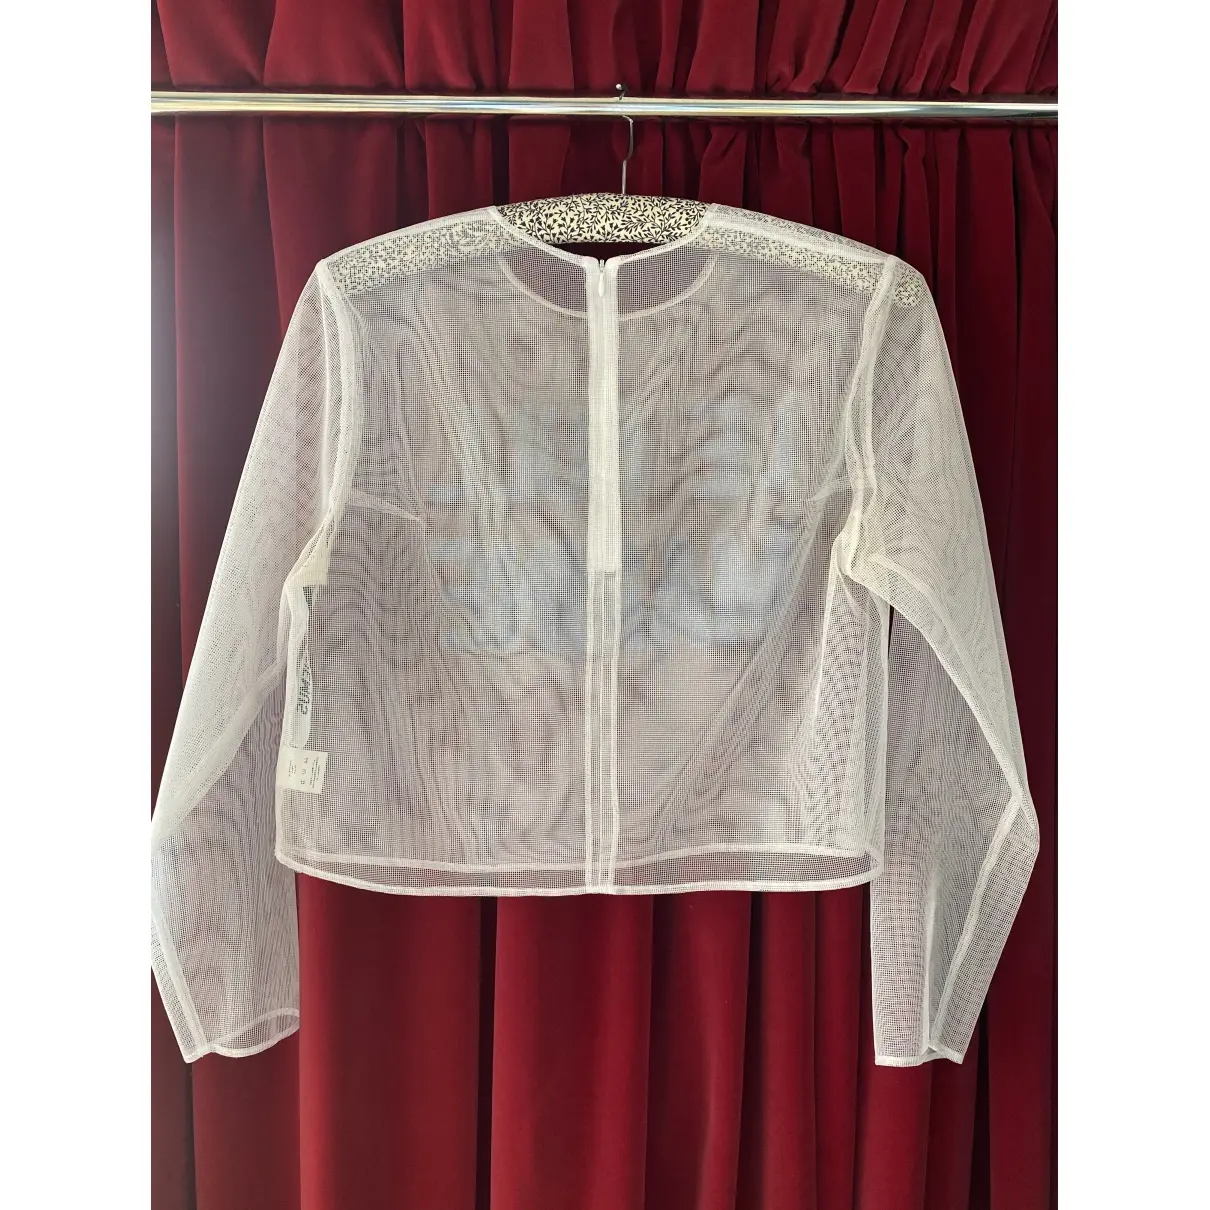 Jacquemus La Piscine tunic for sale